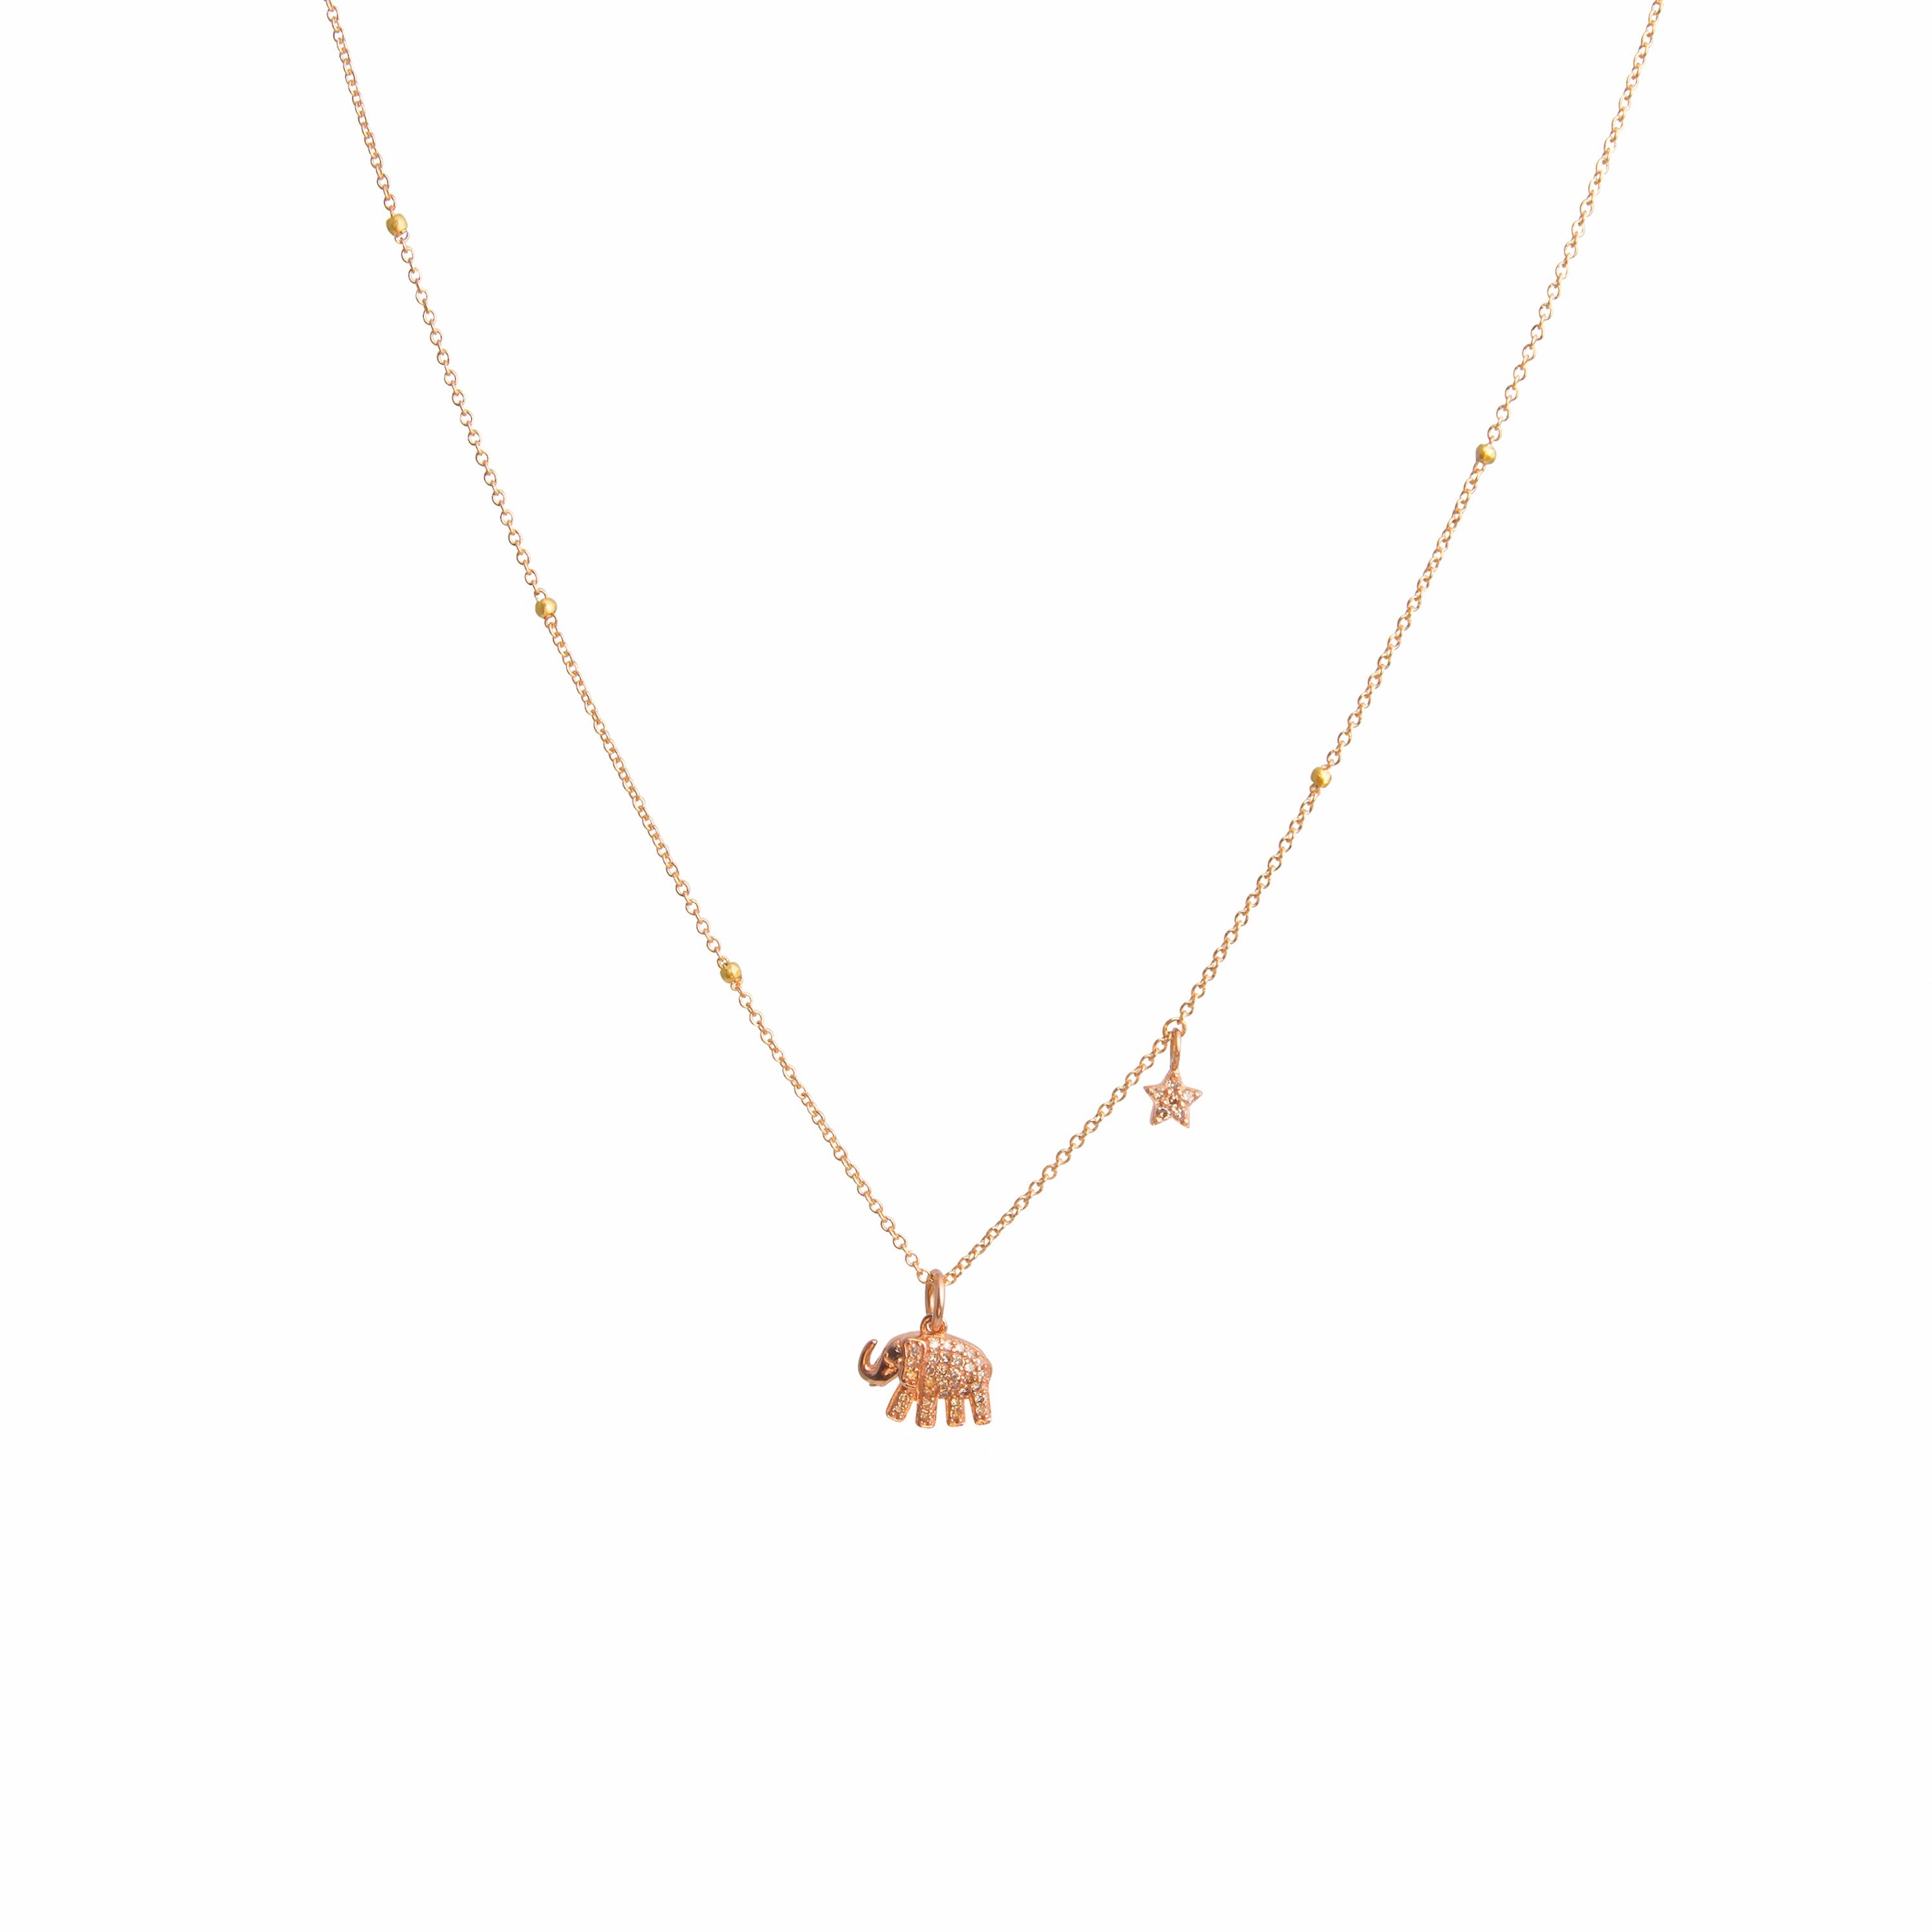 Rose Gold Diamond Elephant Necklace with Tiny Star Charm